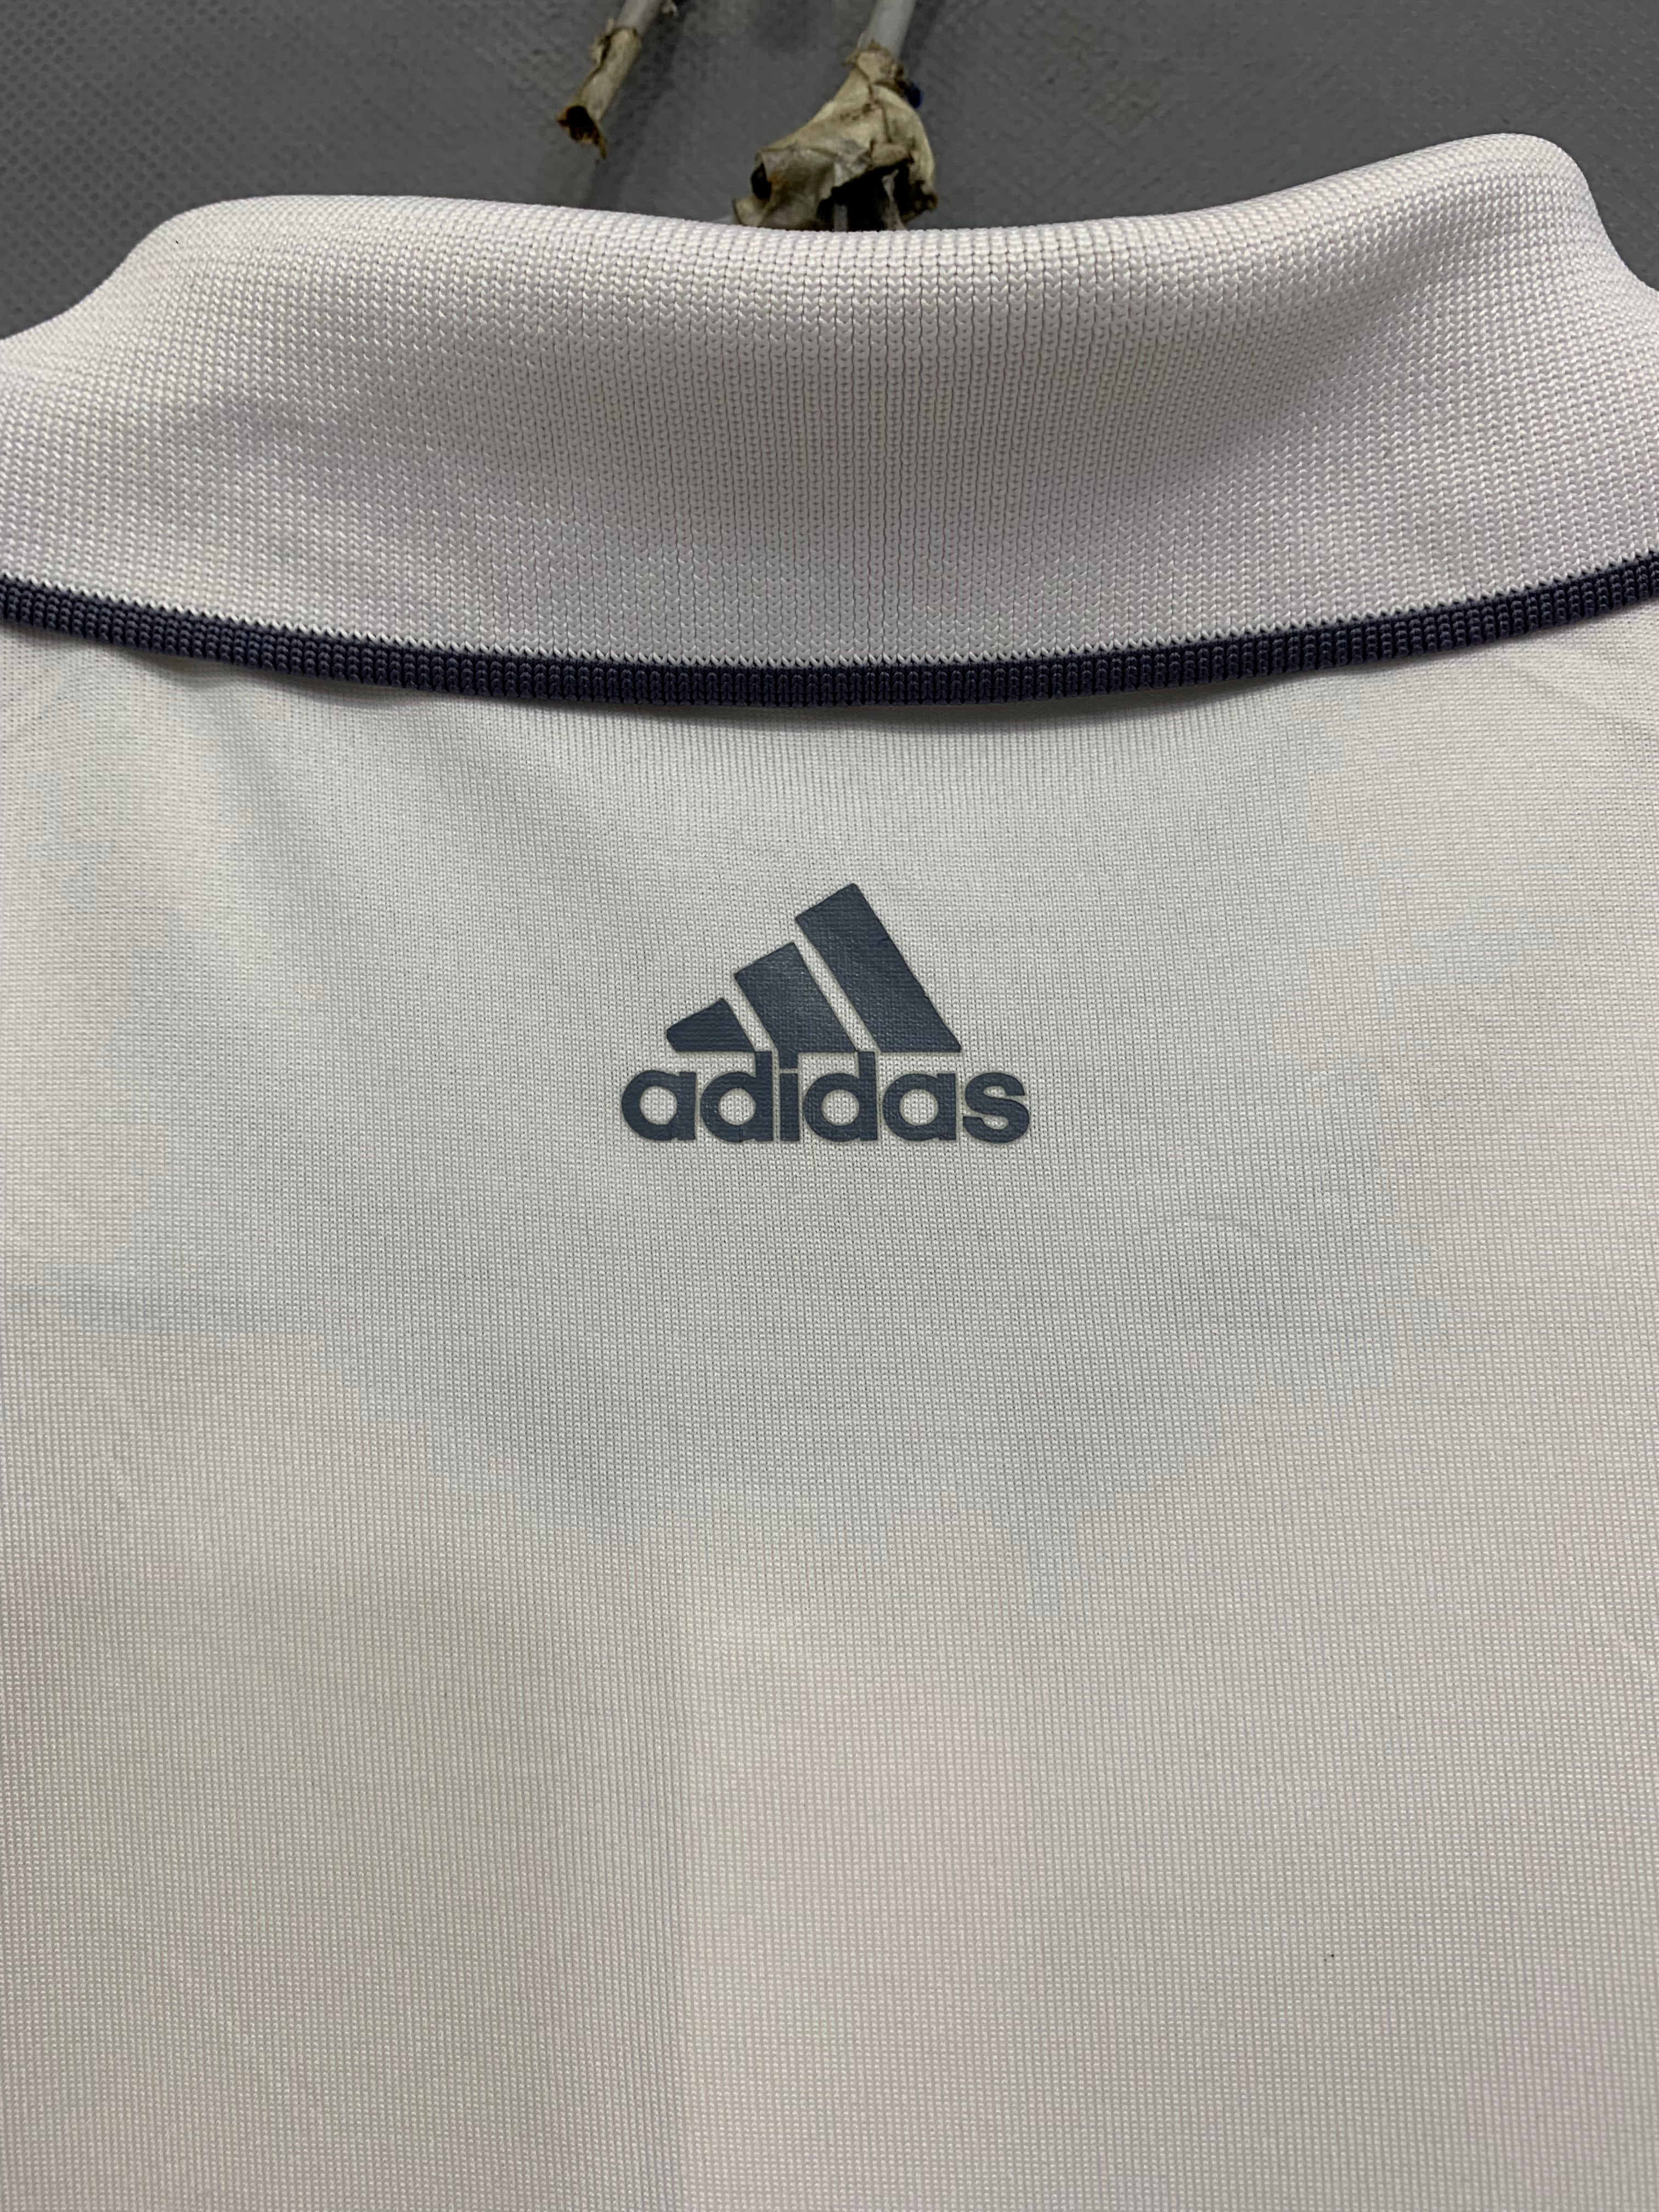 Adidas Branded Original For Sports  Polo Men T Shirt